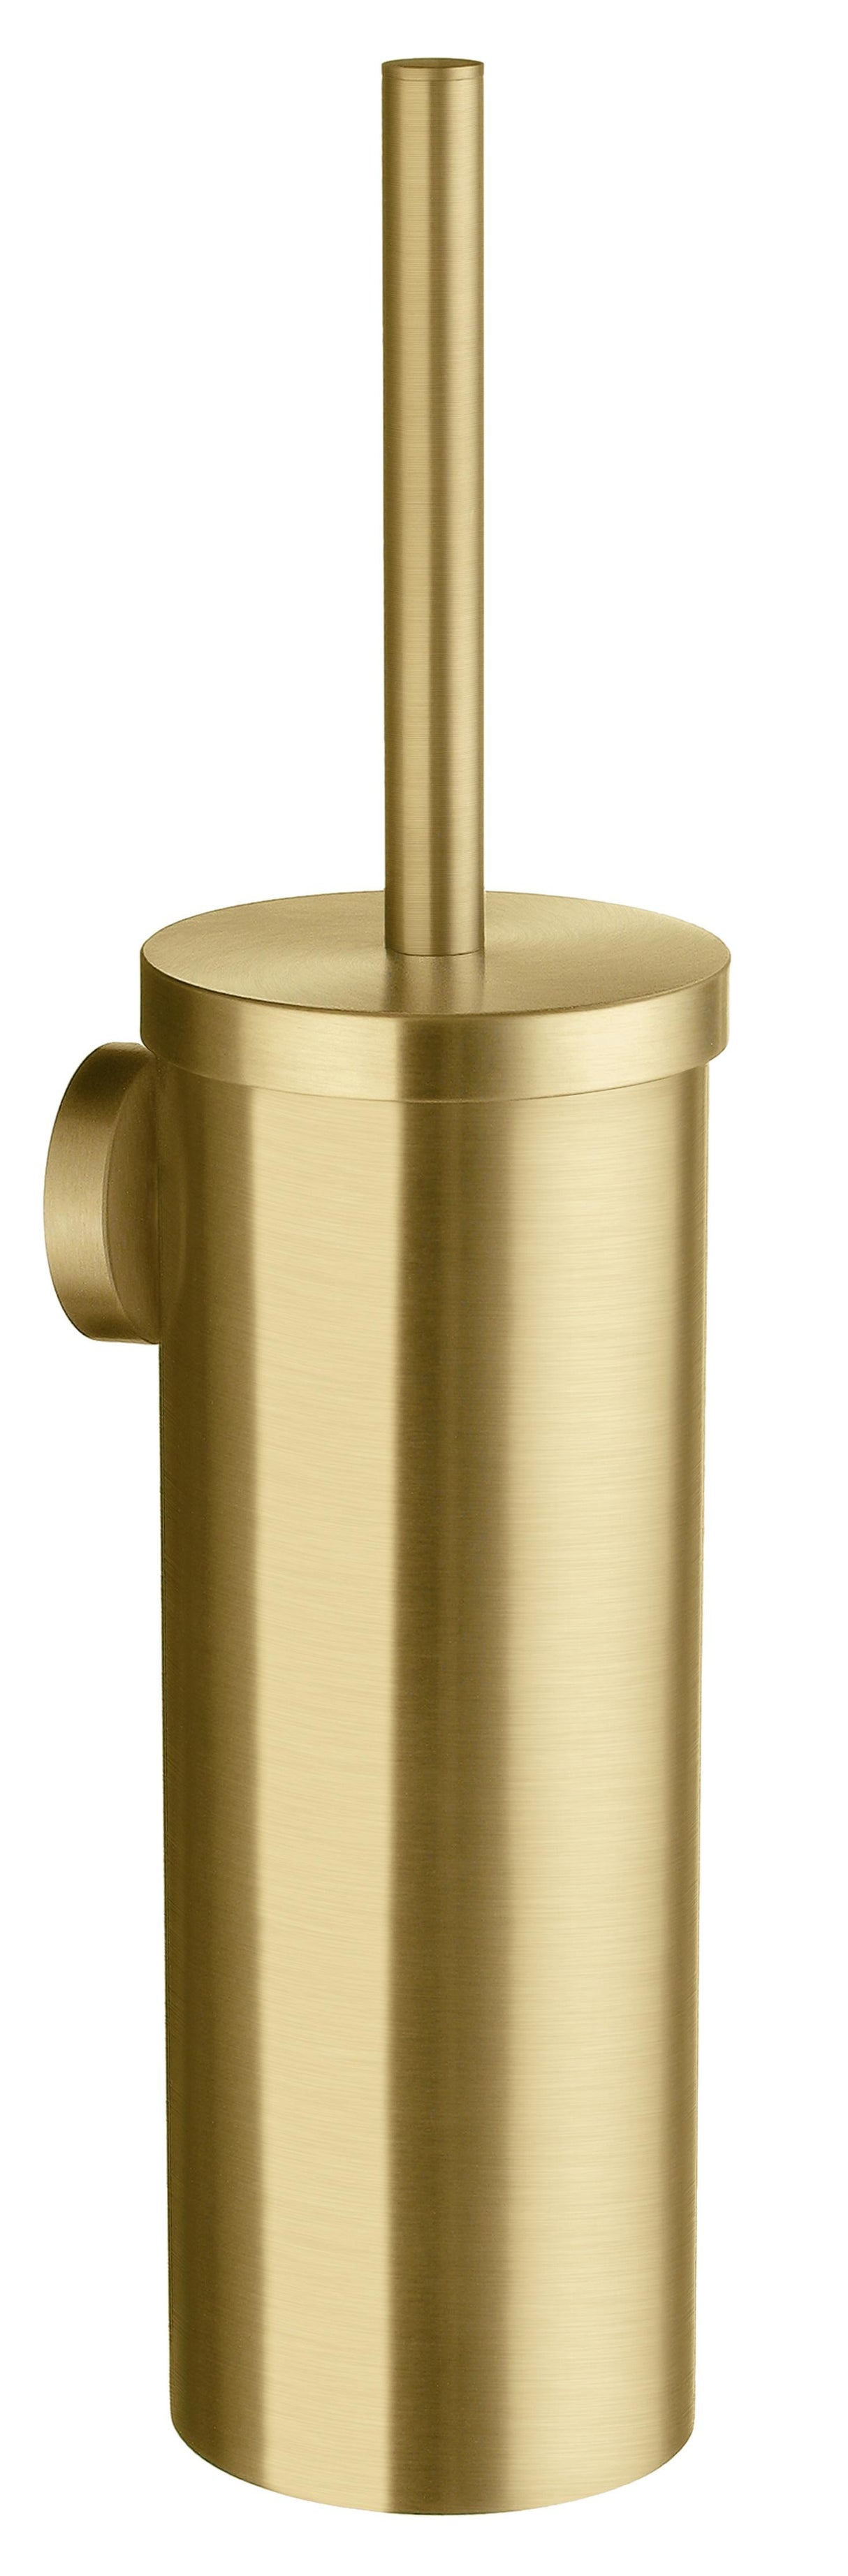 Smedbo Home Toilet Brush Wallmount in Brushed Brass